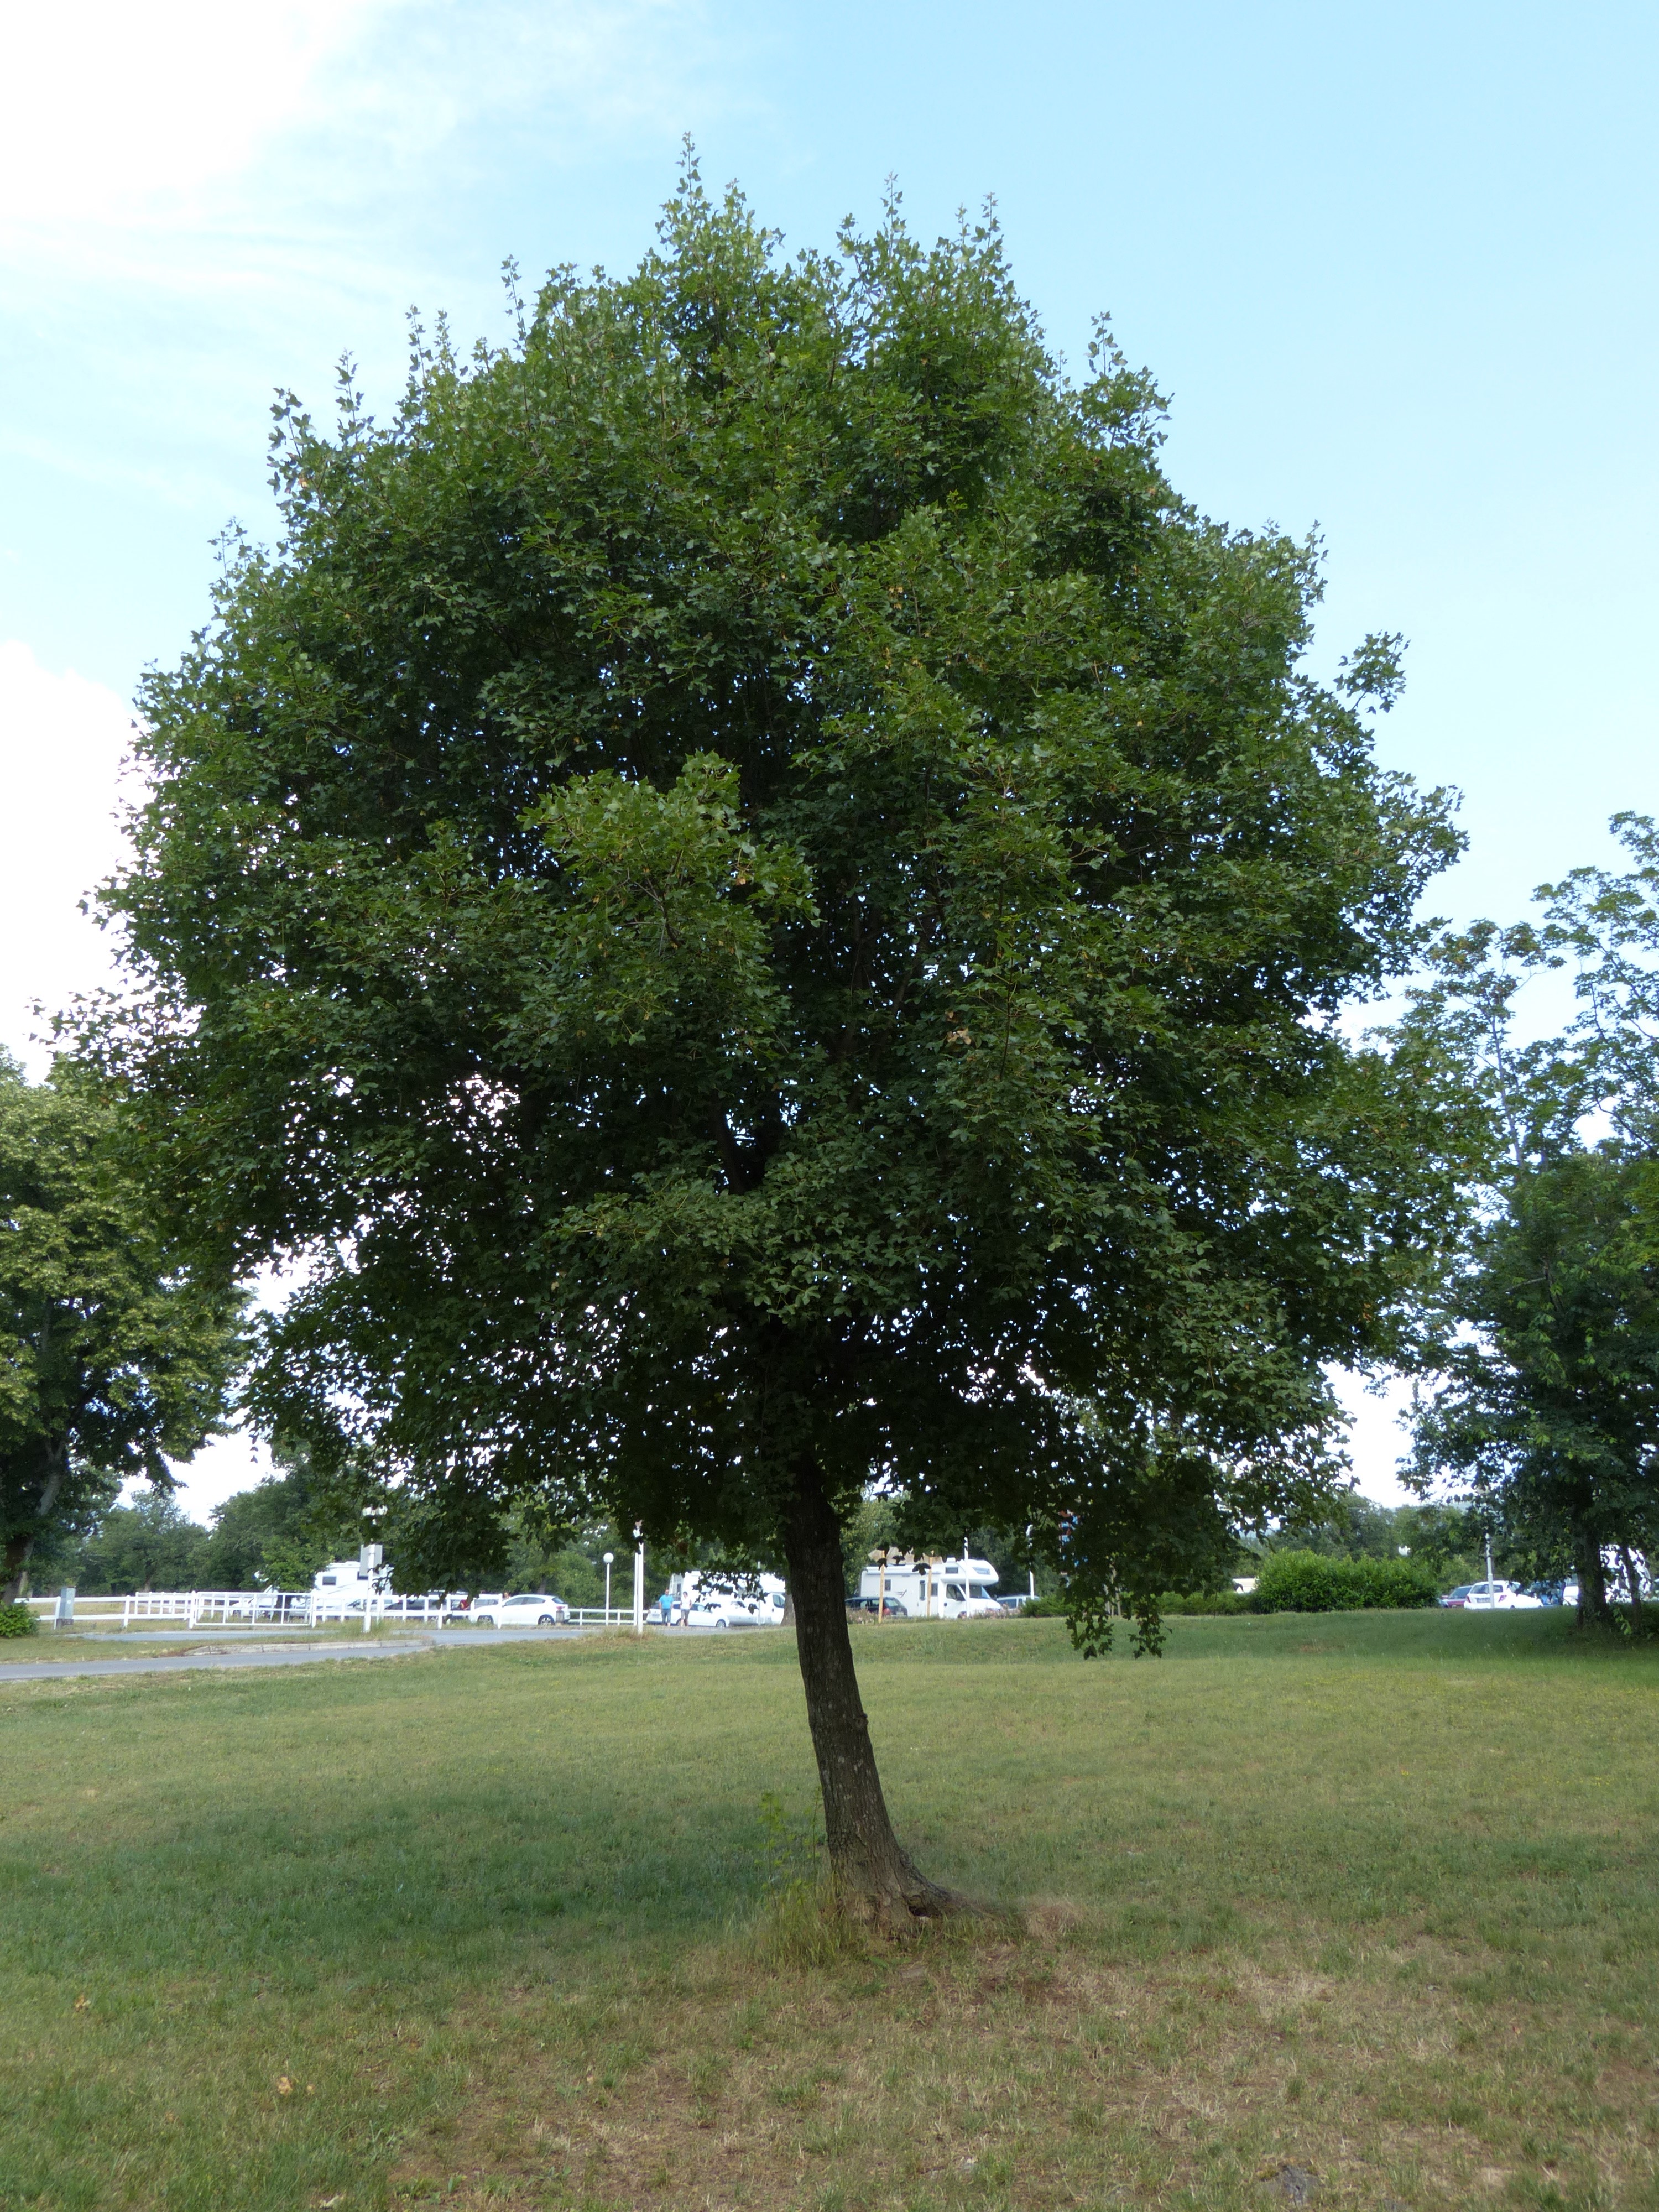 Клен монпелийский  (Acer monspessulanum)